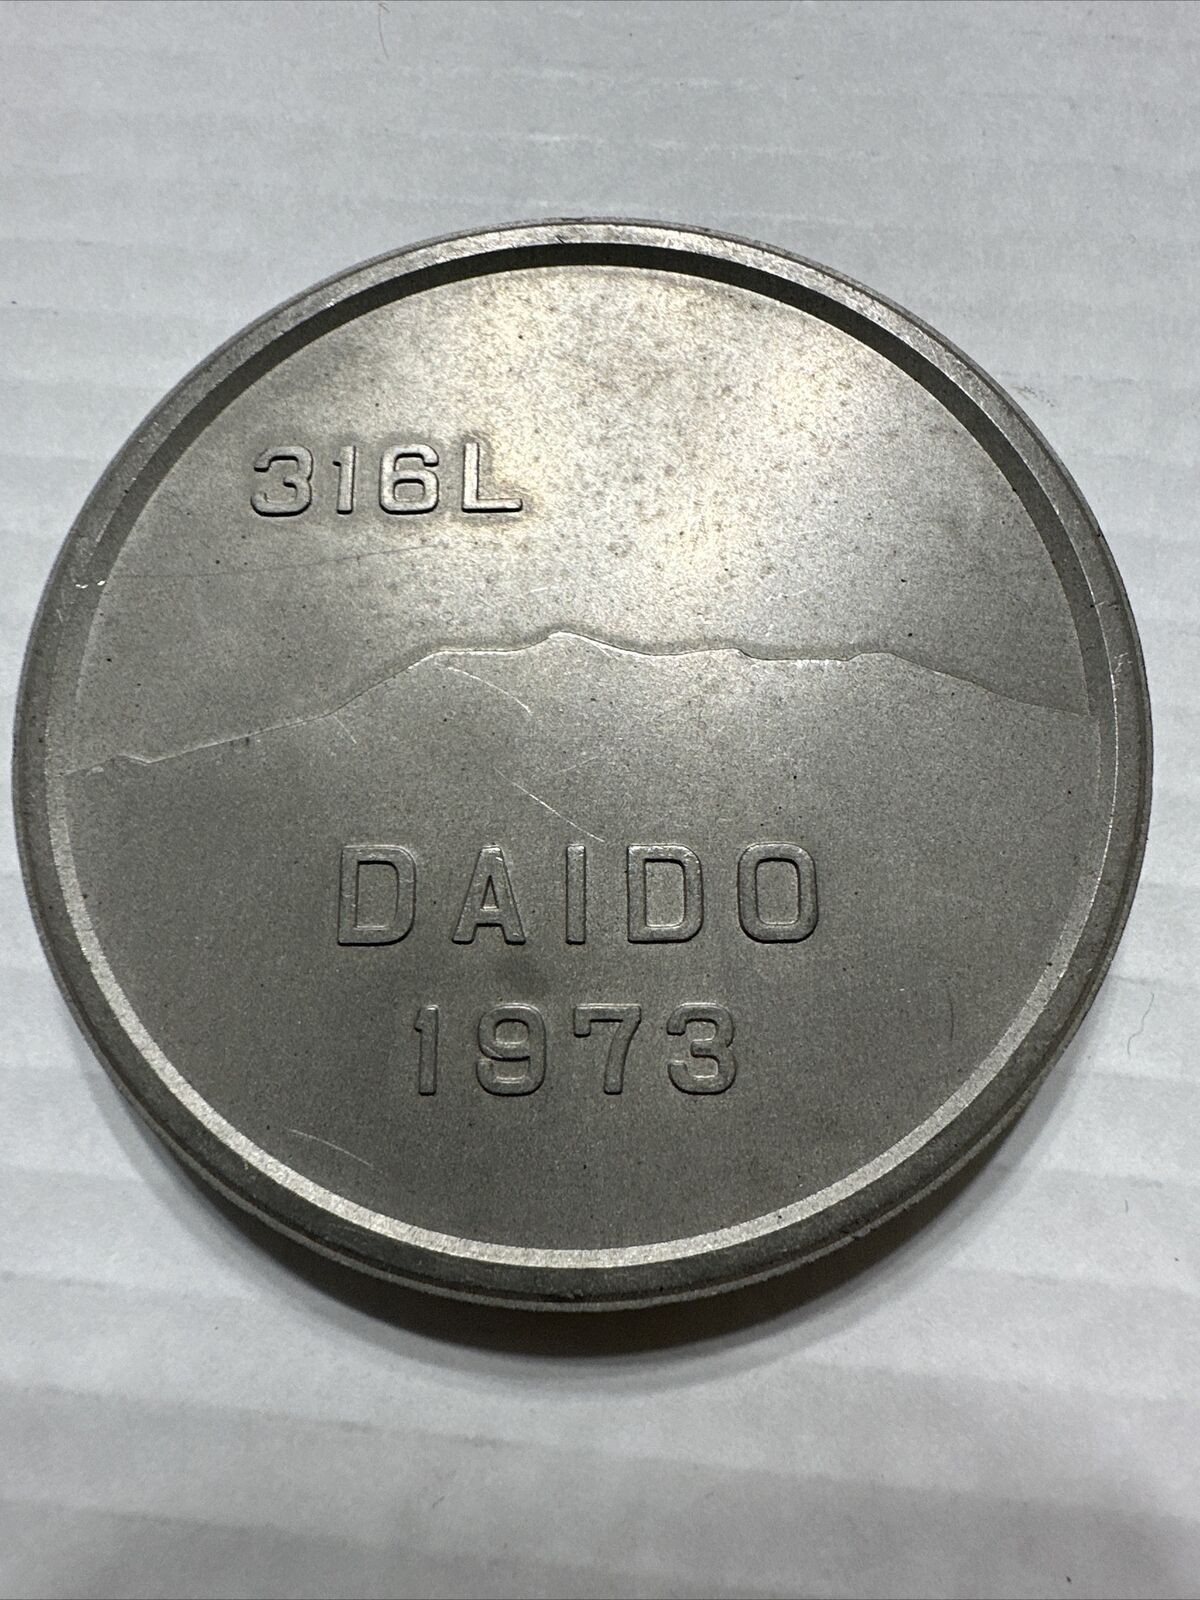 Rare Daidō Metals 1973  Metal Paper Weight Industrial Vintage